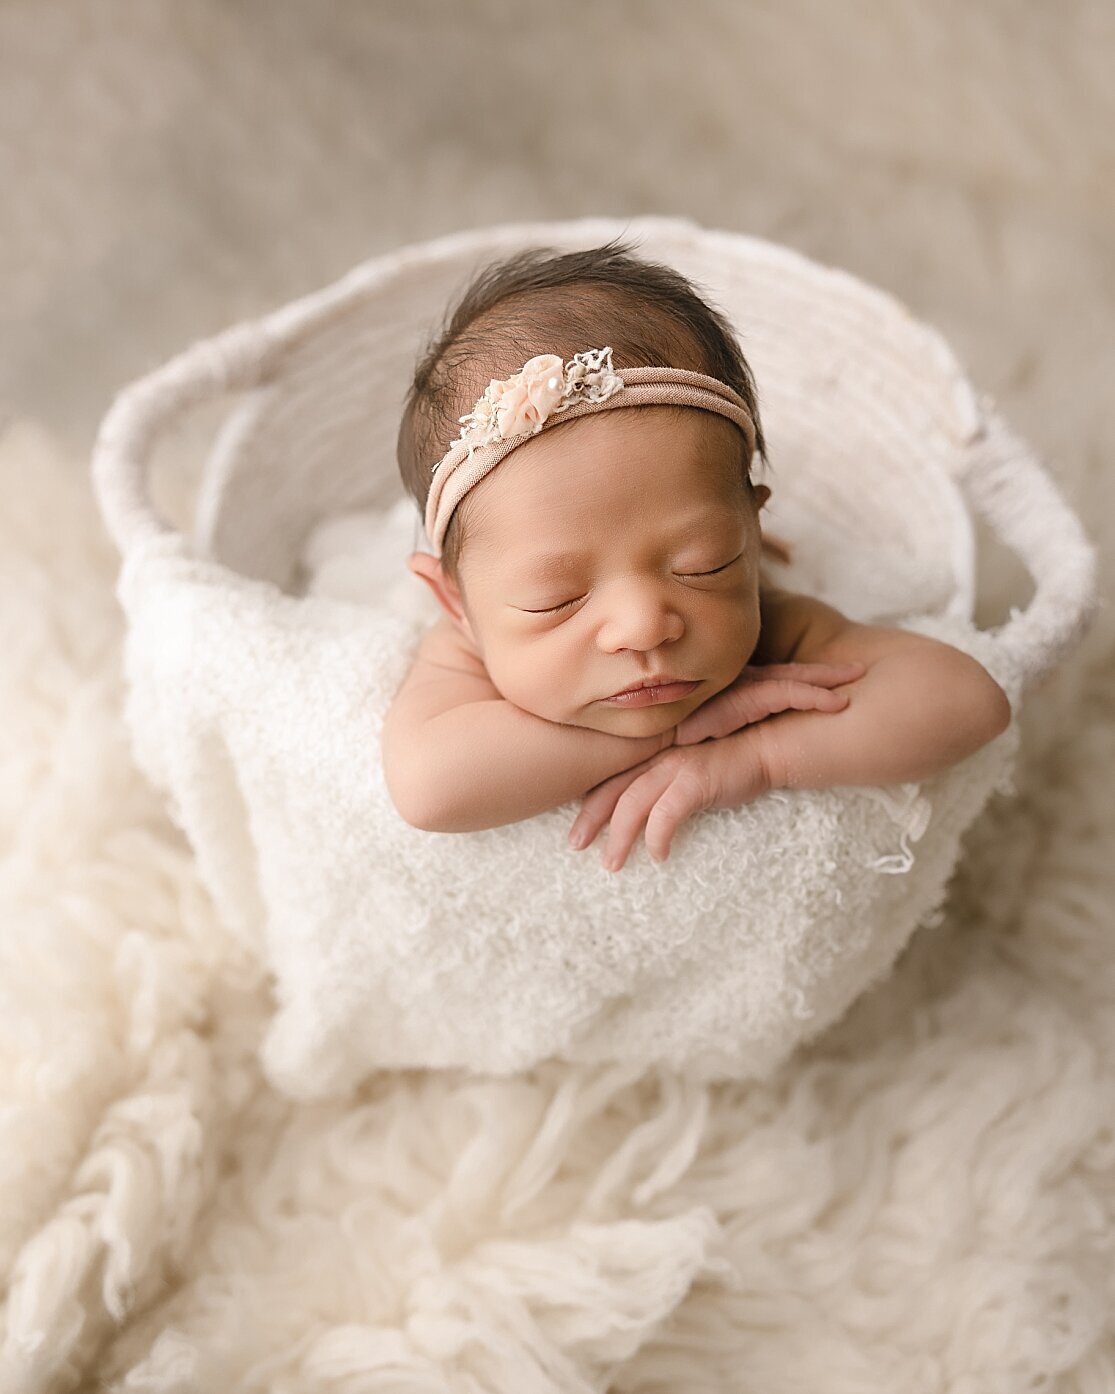 baby girl sleeping in white bucket for newborn pictures in hillsboro oregon